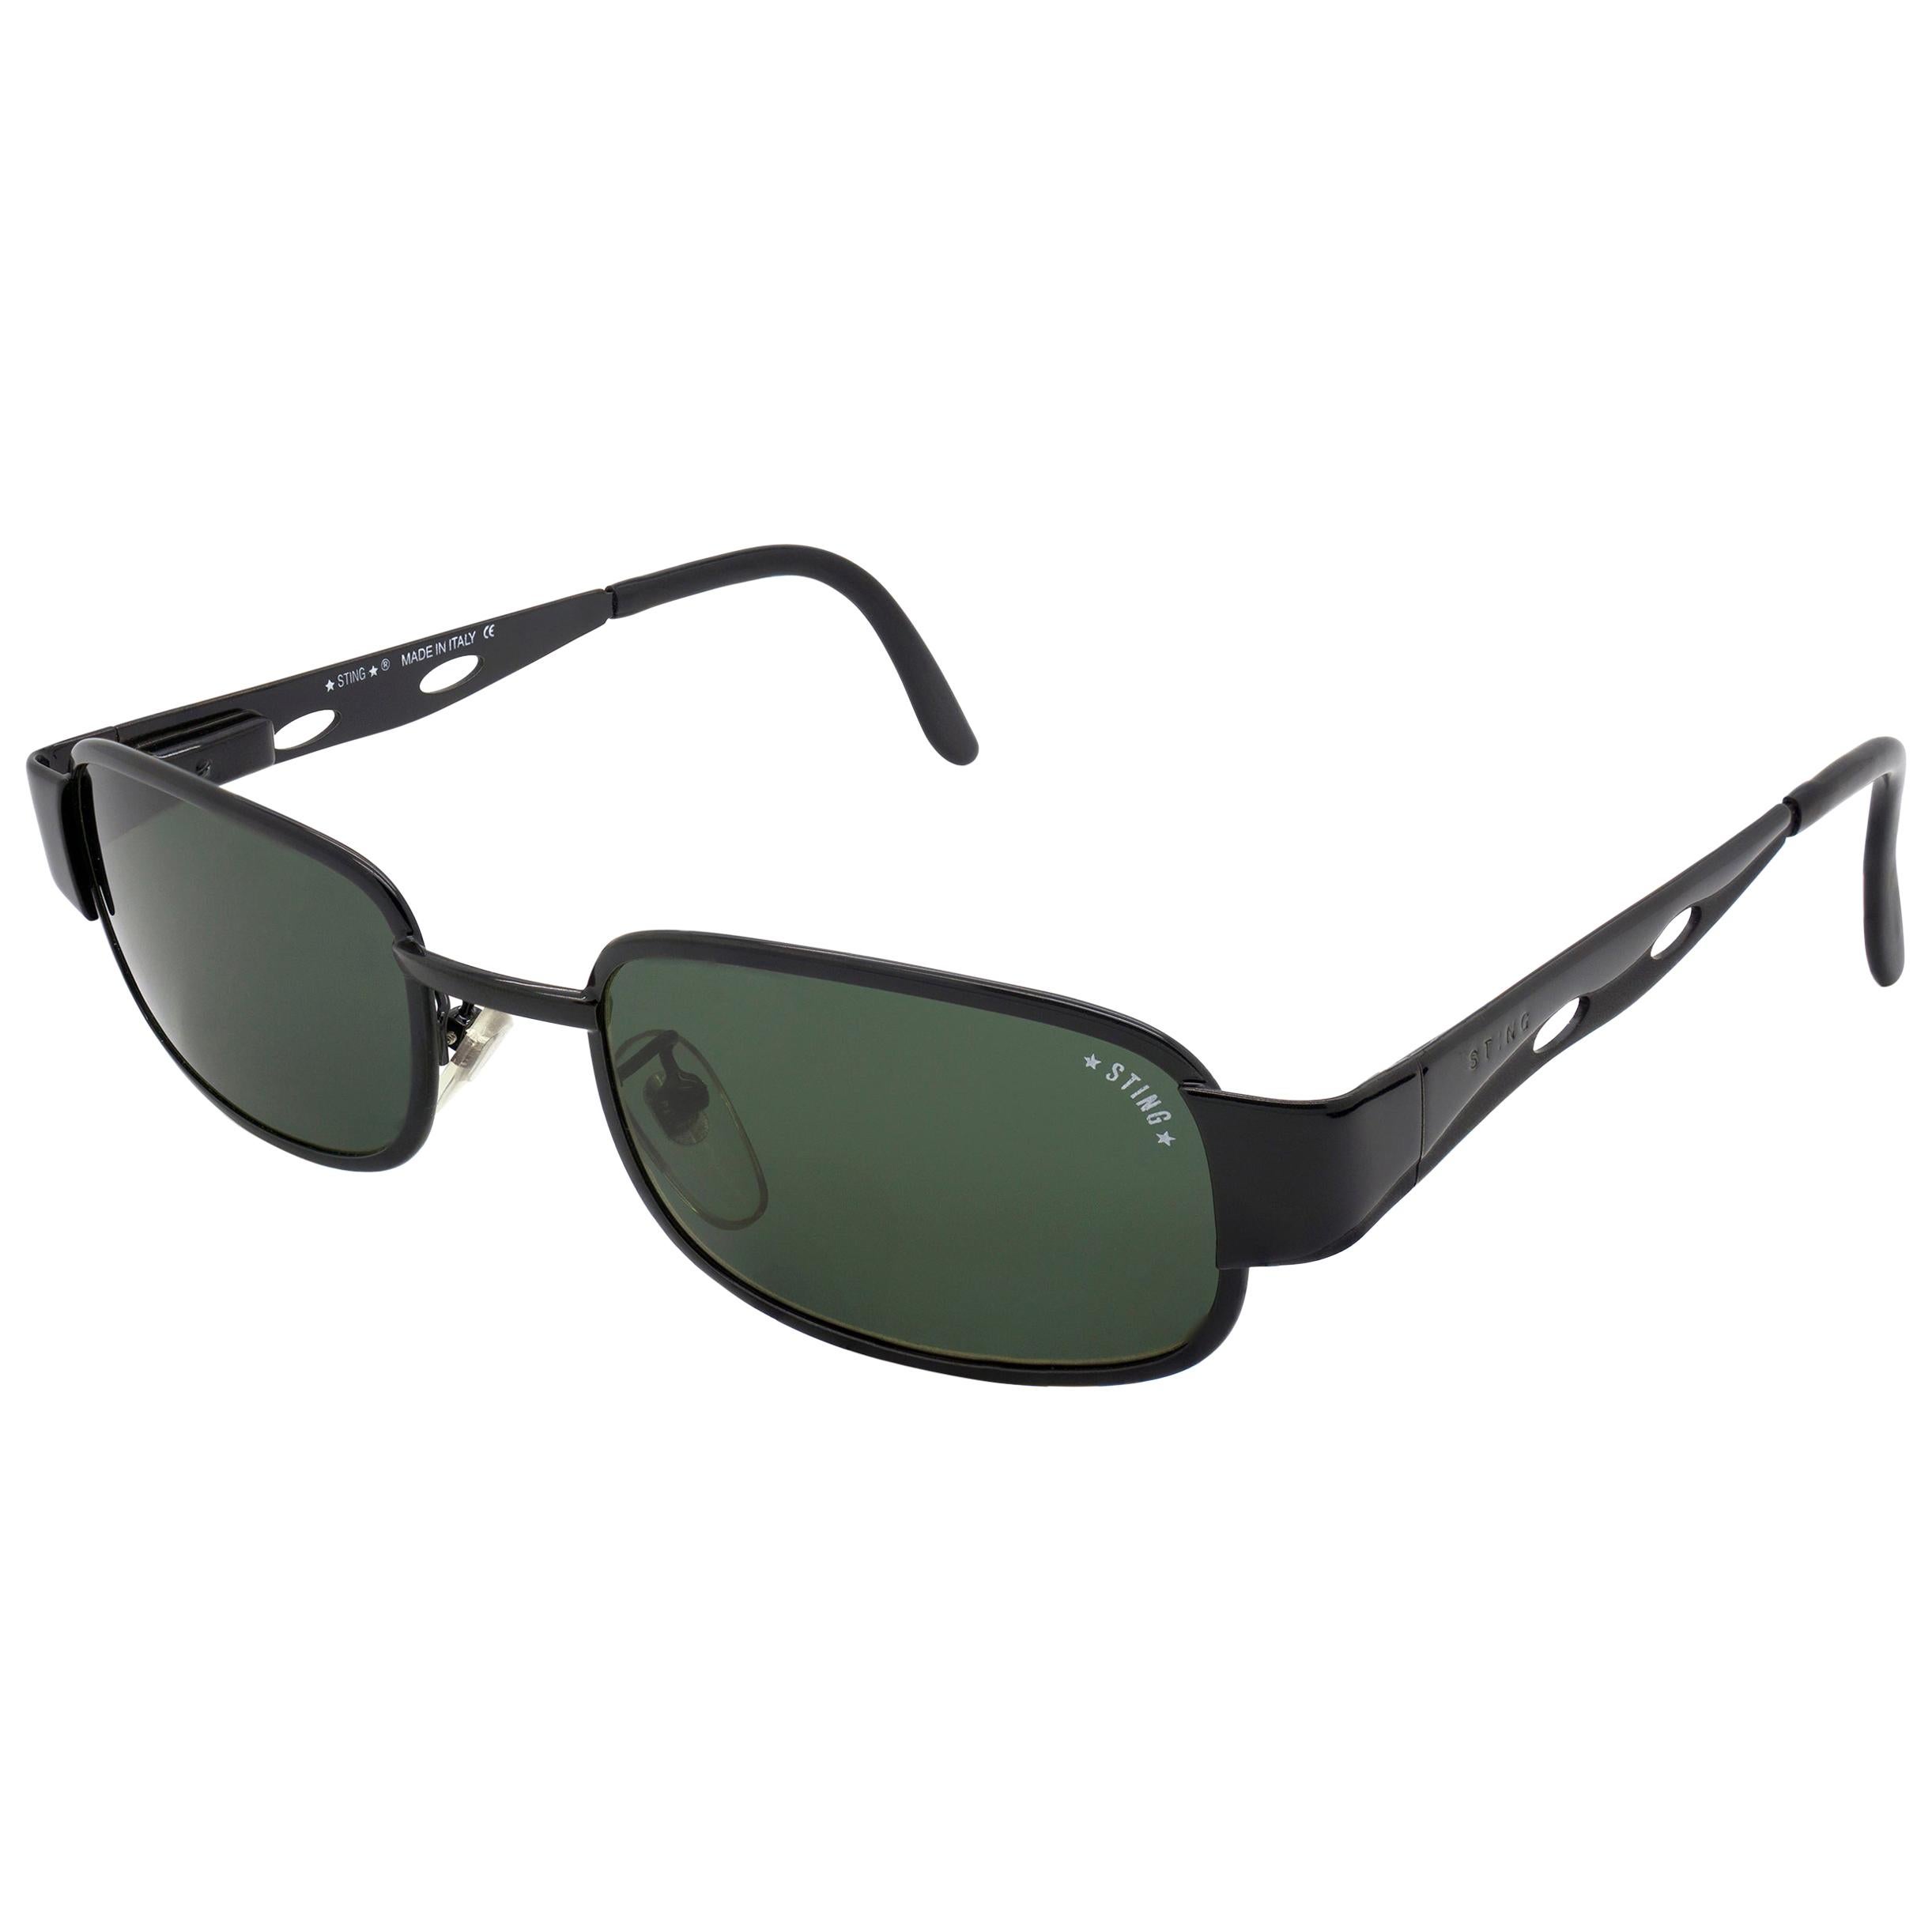 Sting black rectangular sunglasses, Italy 90s